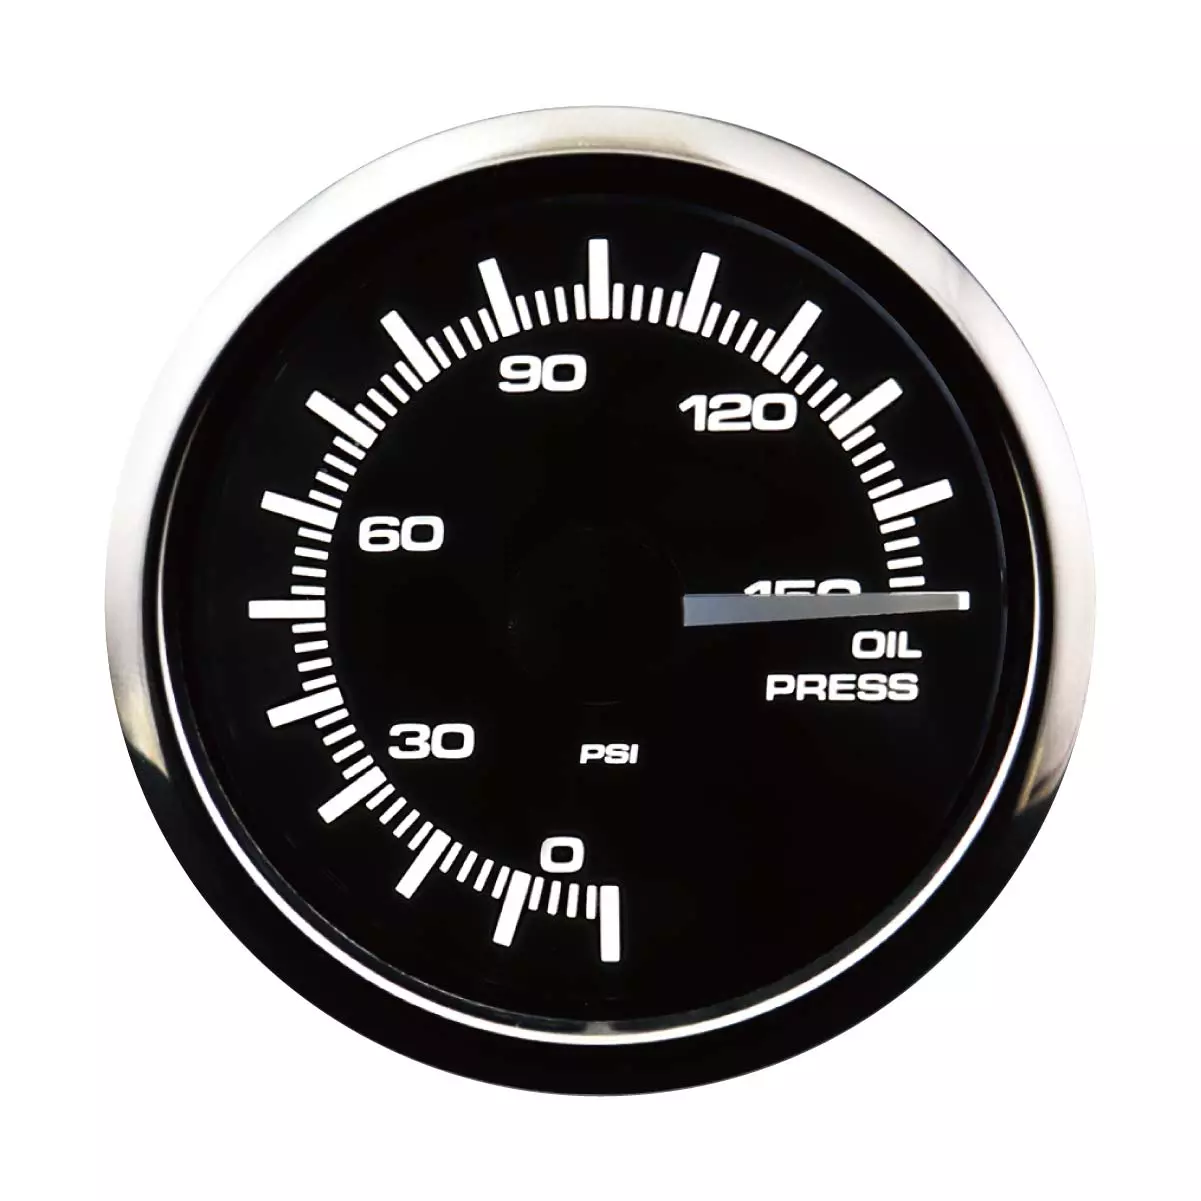 MOTOR METER RACING Electronic Oil Pressure Gauge PSI 2" LED Backlit White Amber Waterproof Pin-Style Install